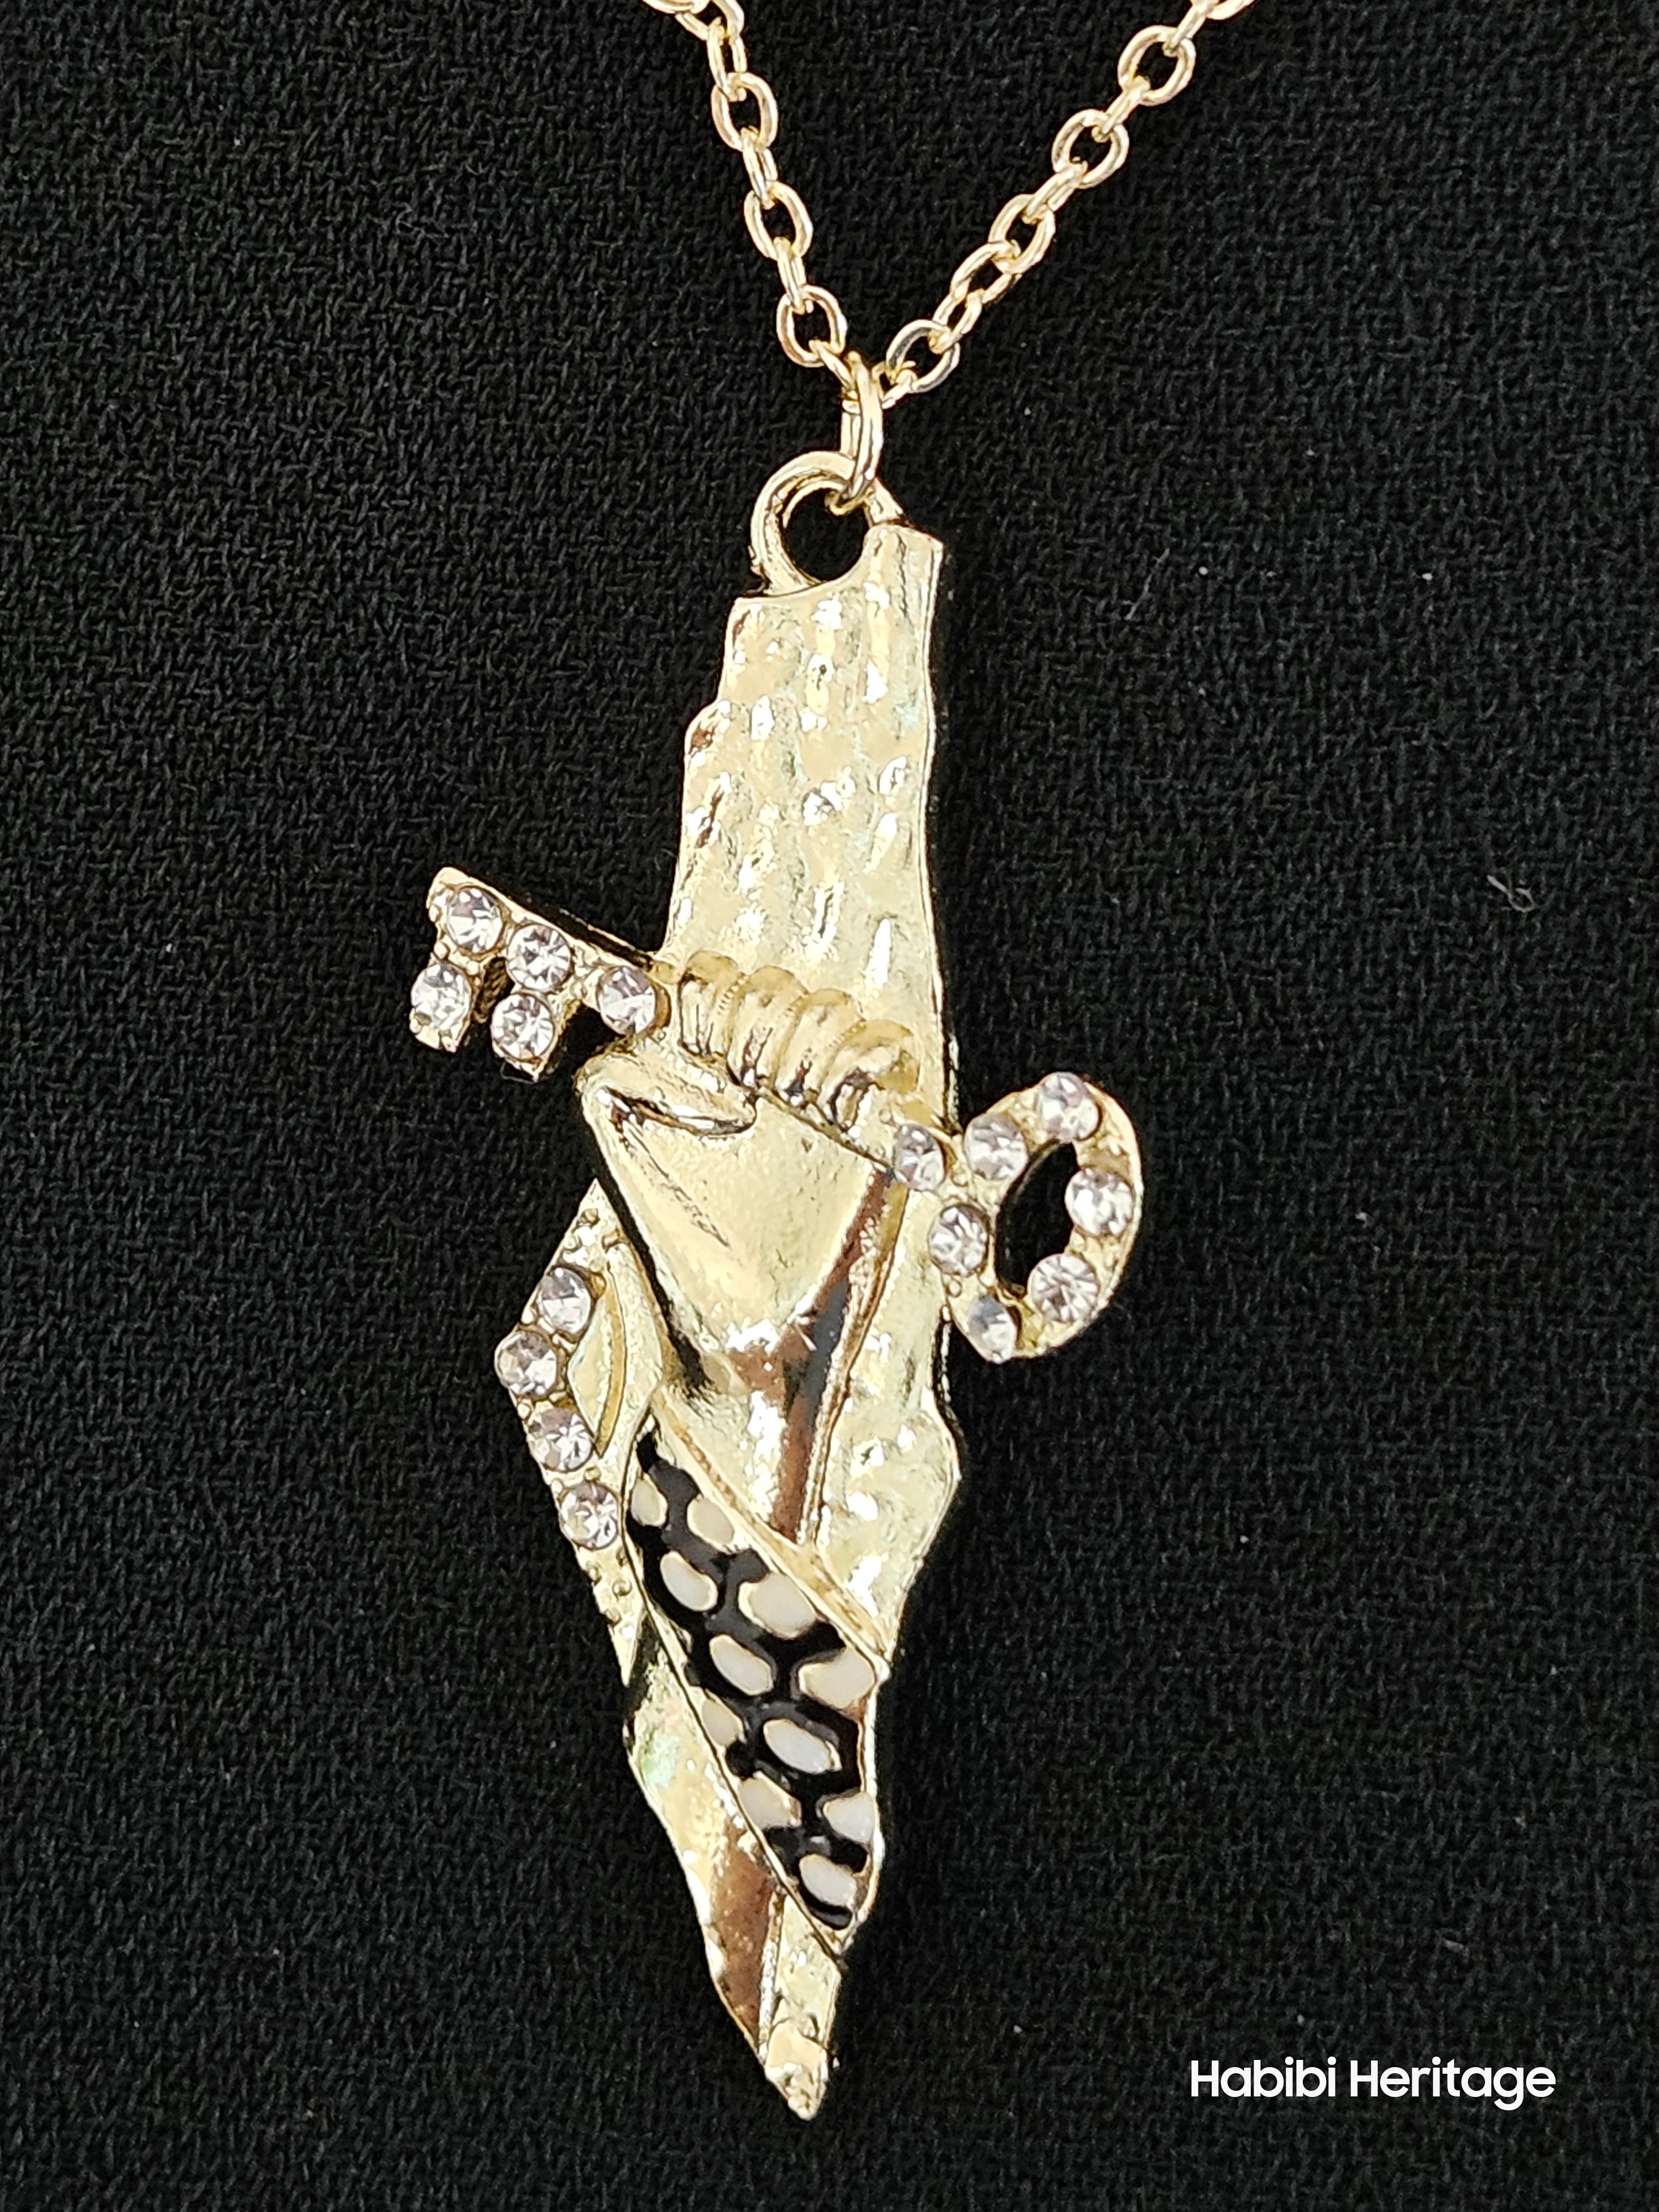 Palestine Keffiyeh Hand and Key Necklace - Habibi Heritage